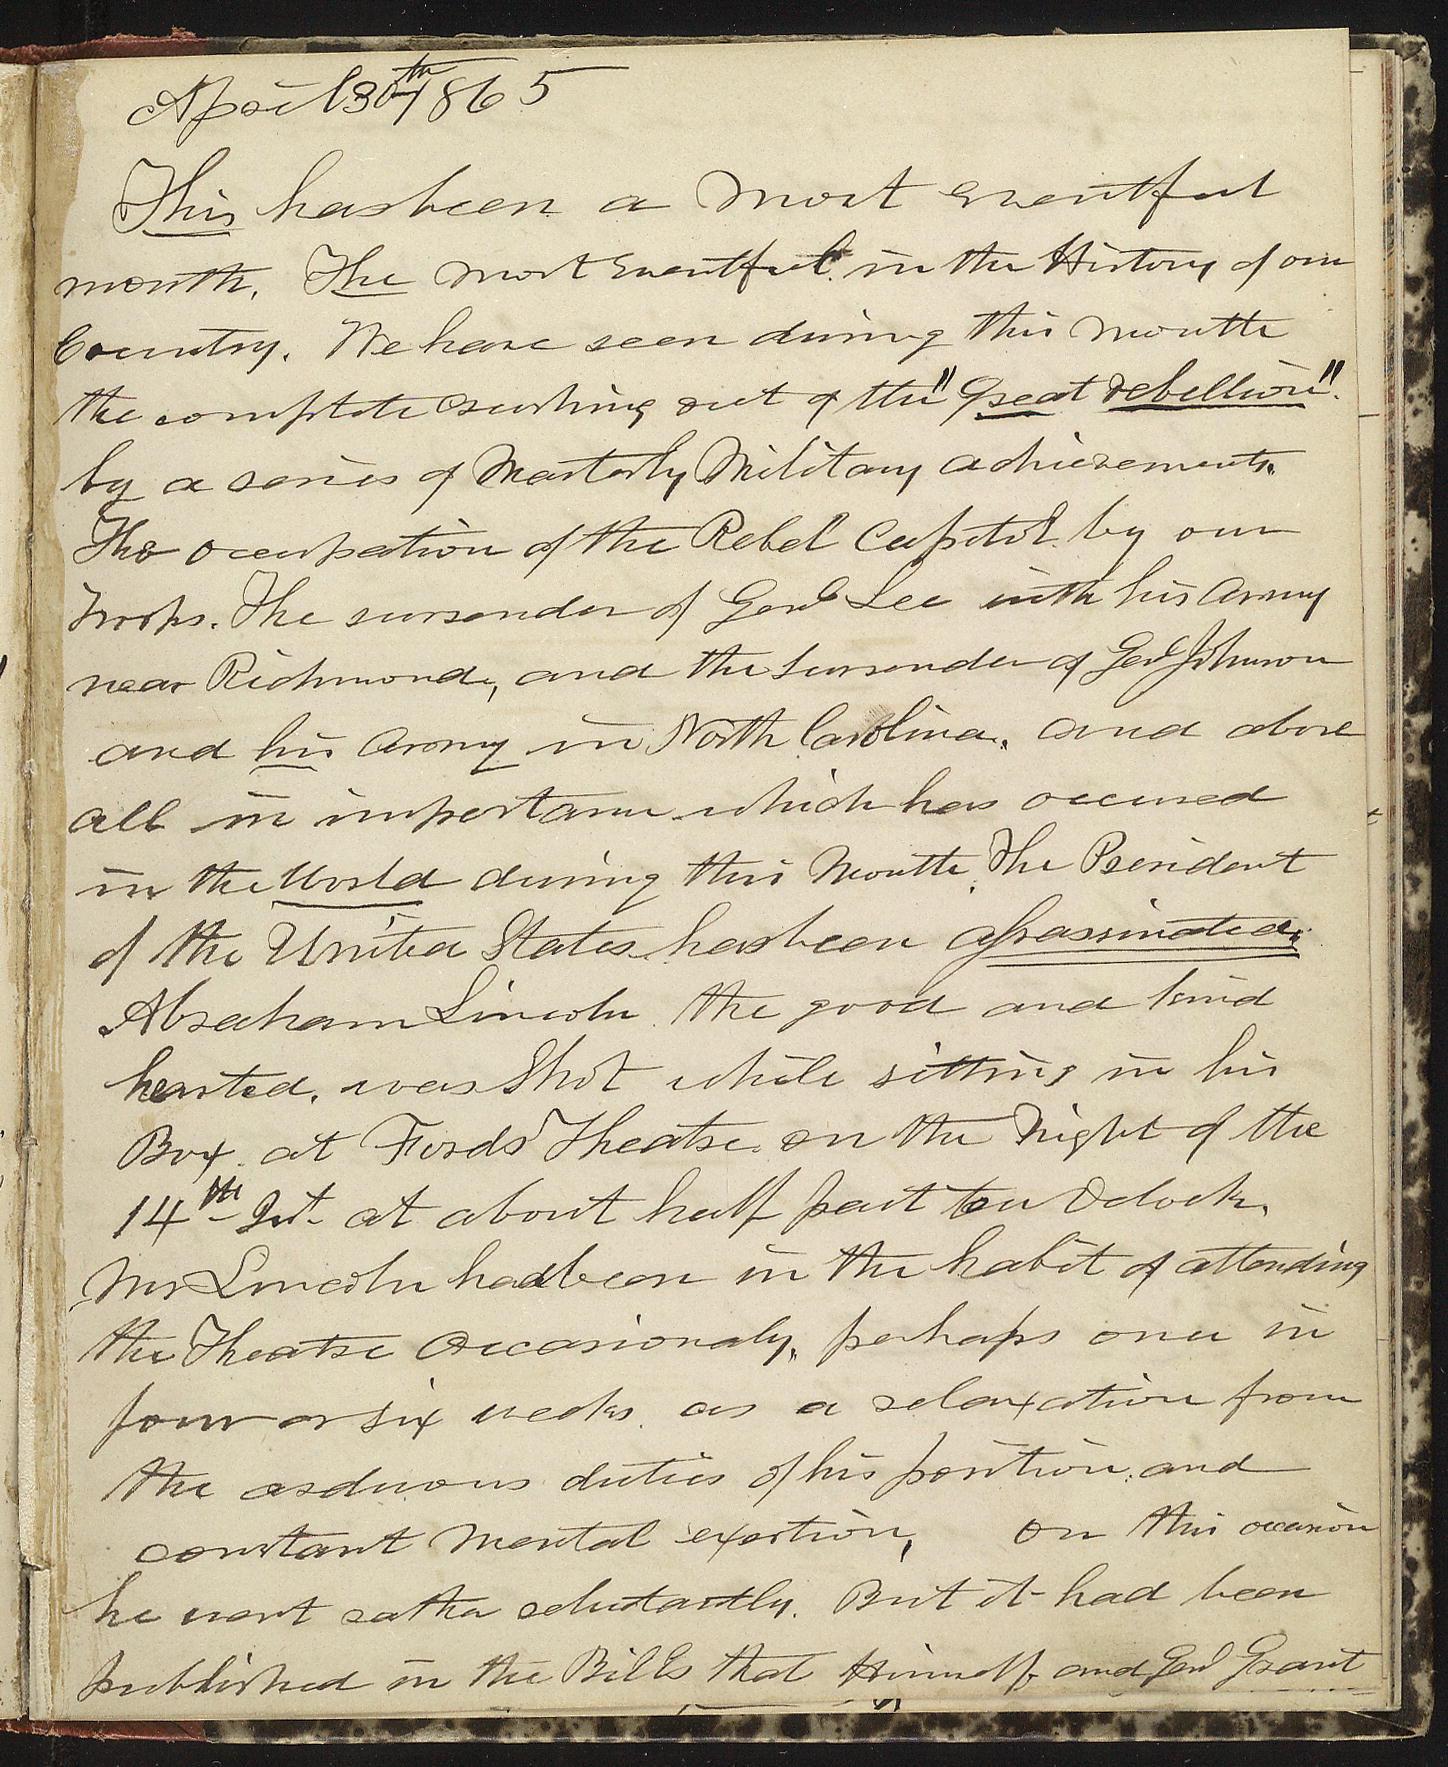 Horatio Nelson Taft Diary, April 30, 1865